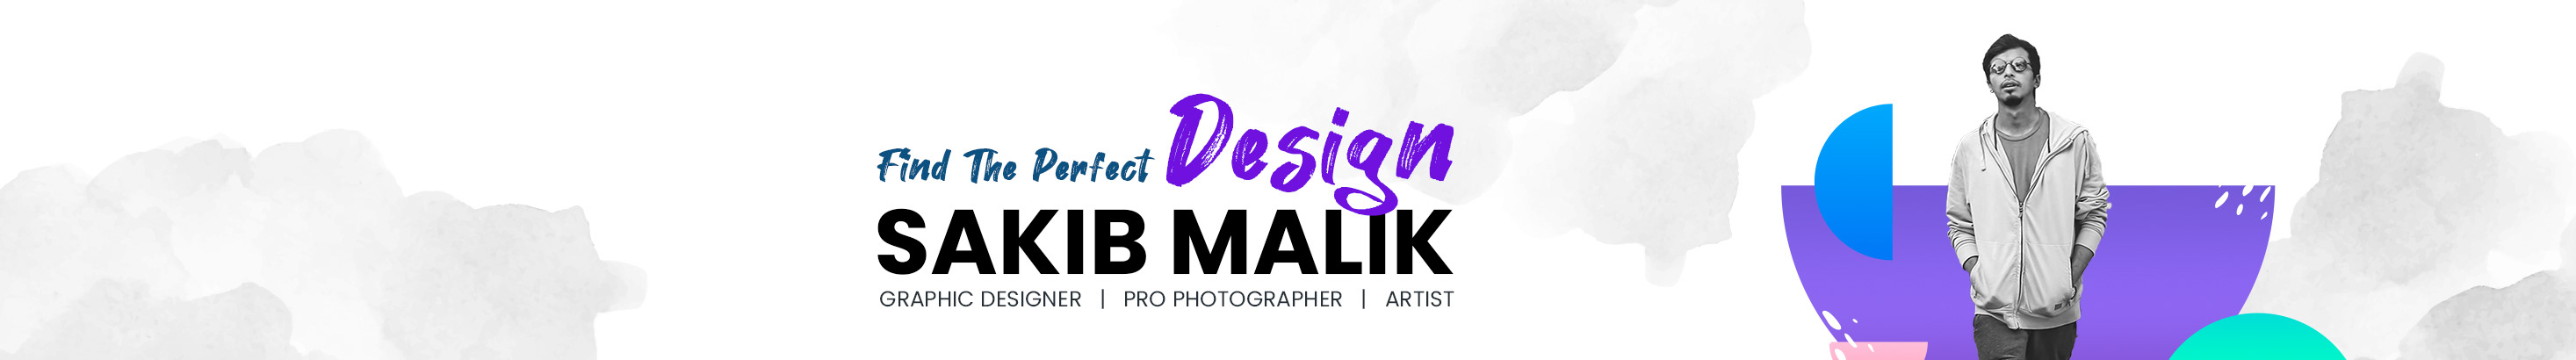 Sakib Malik profil başlığı